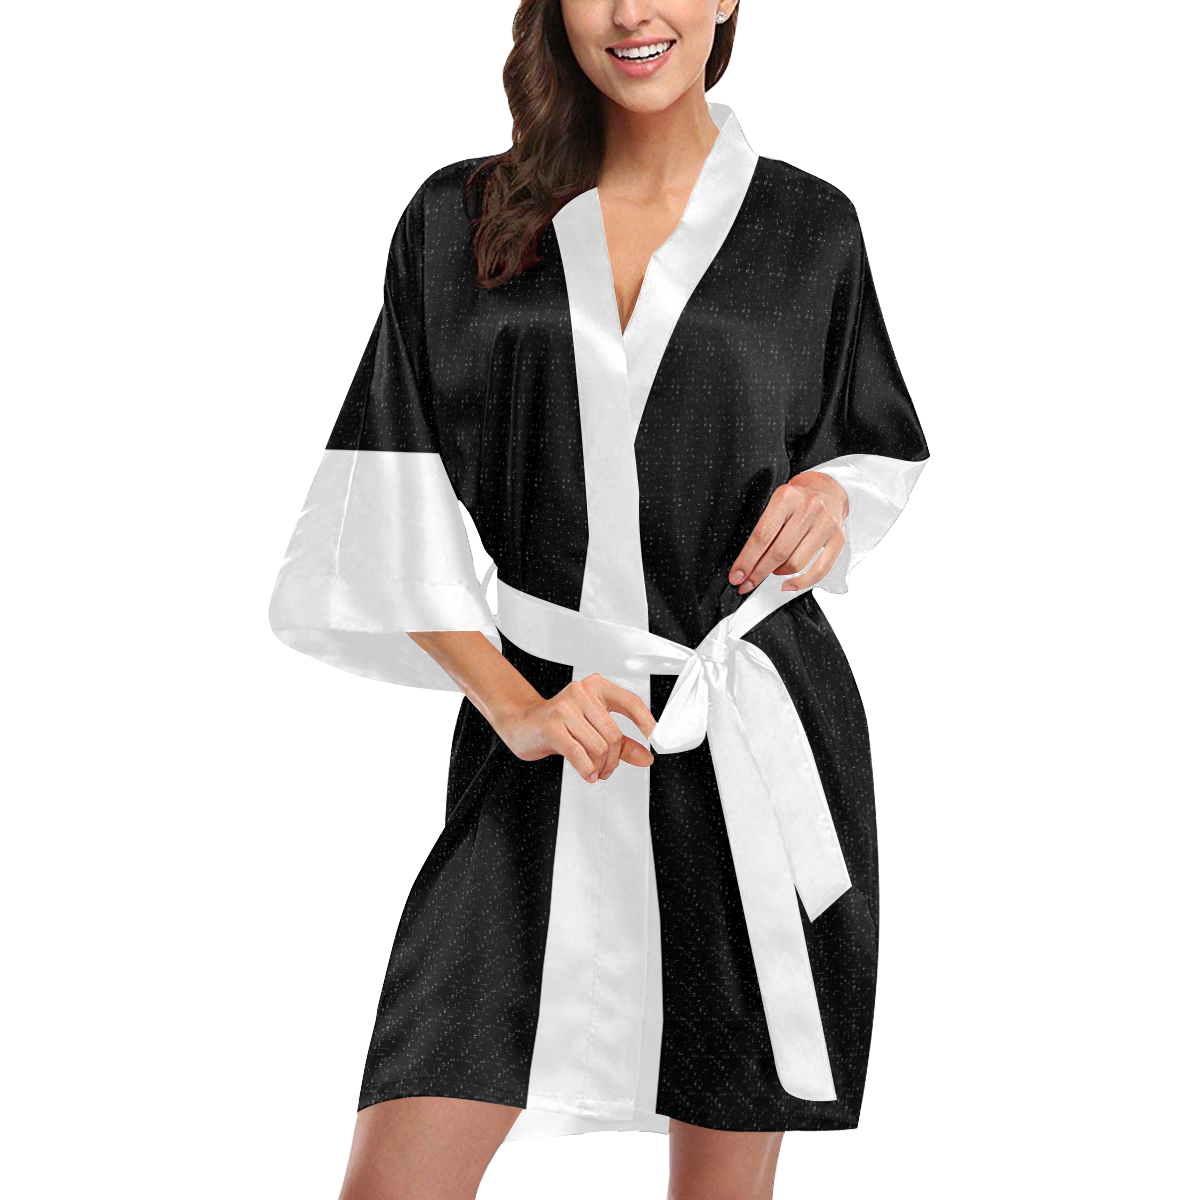 French Maid Black and White Kimono Robe